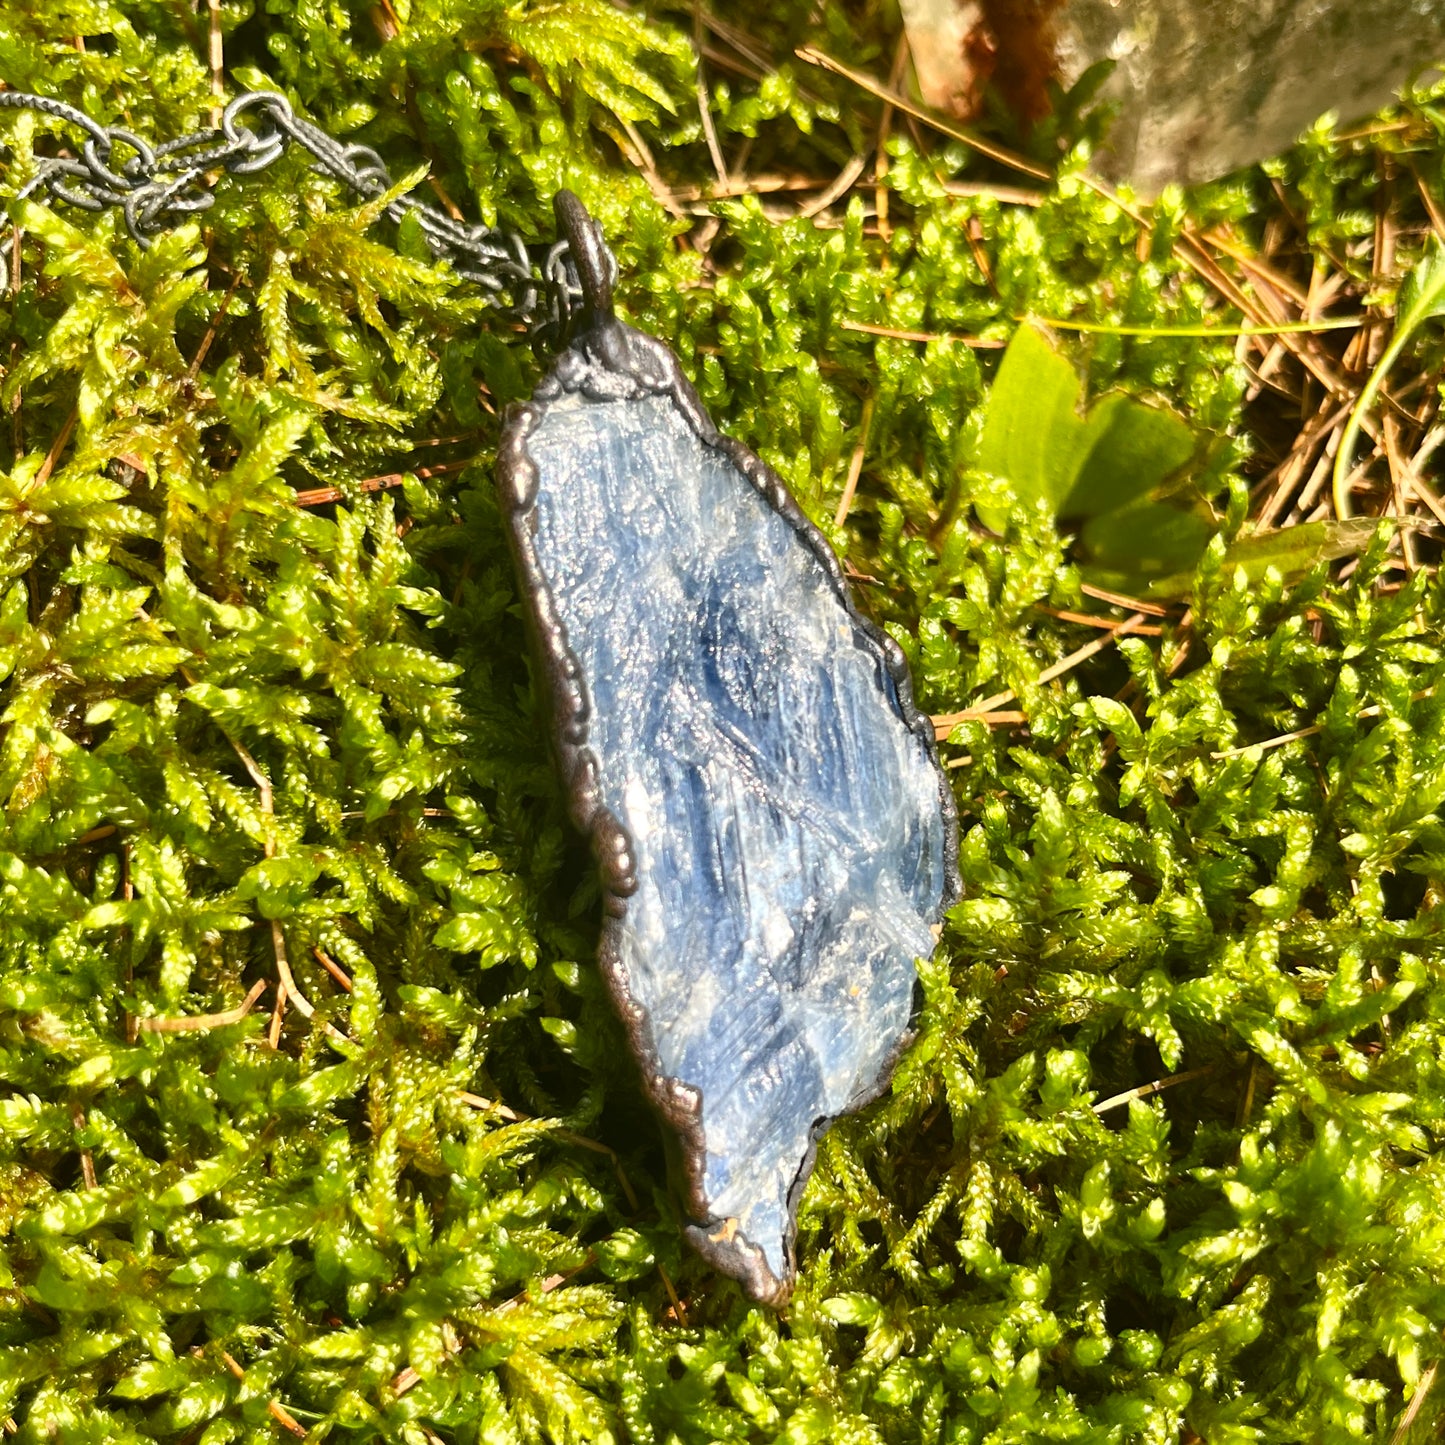 Large Blue Kyanite Chakra Stone Necklace